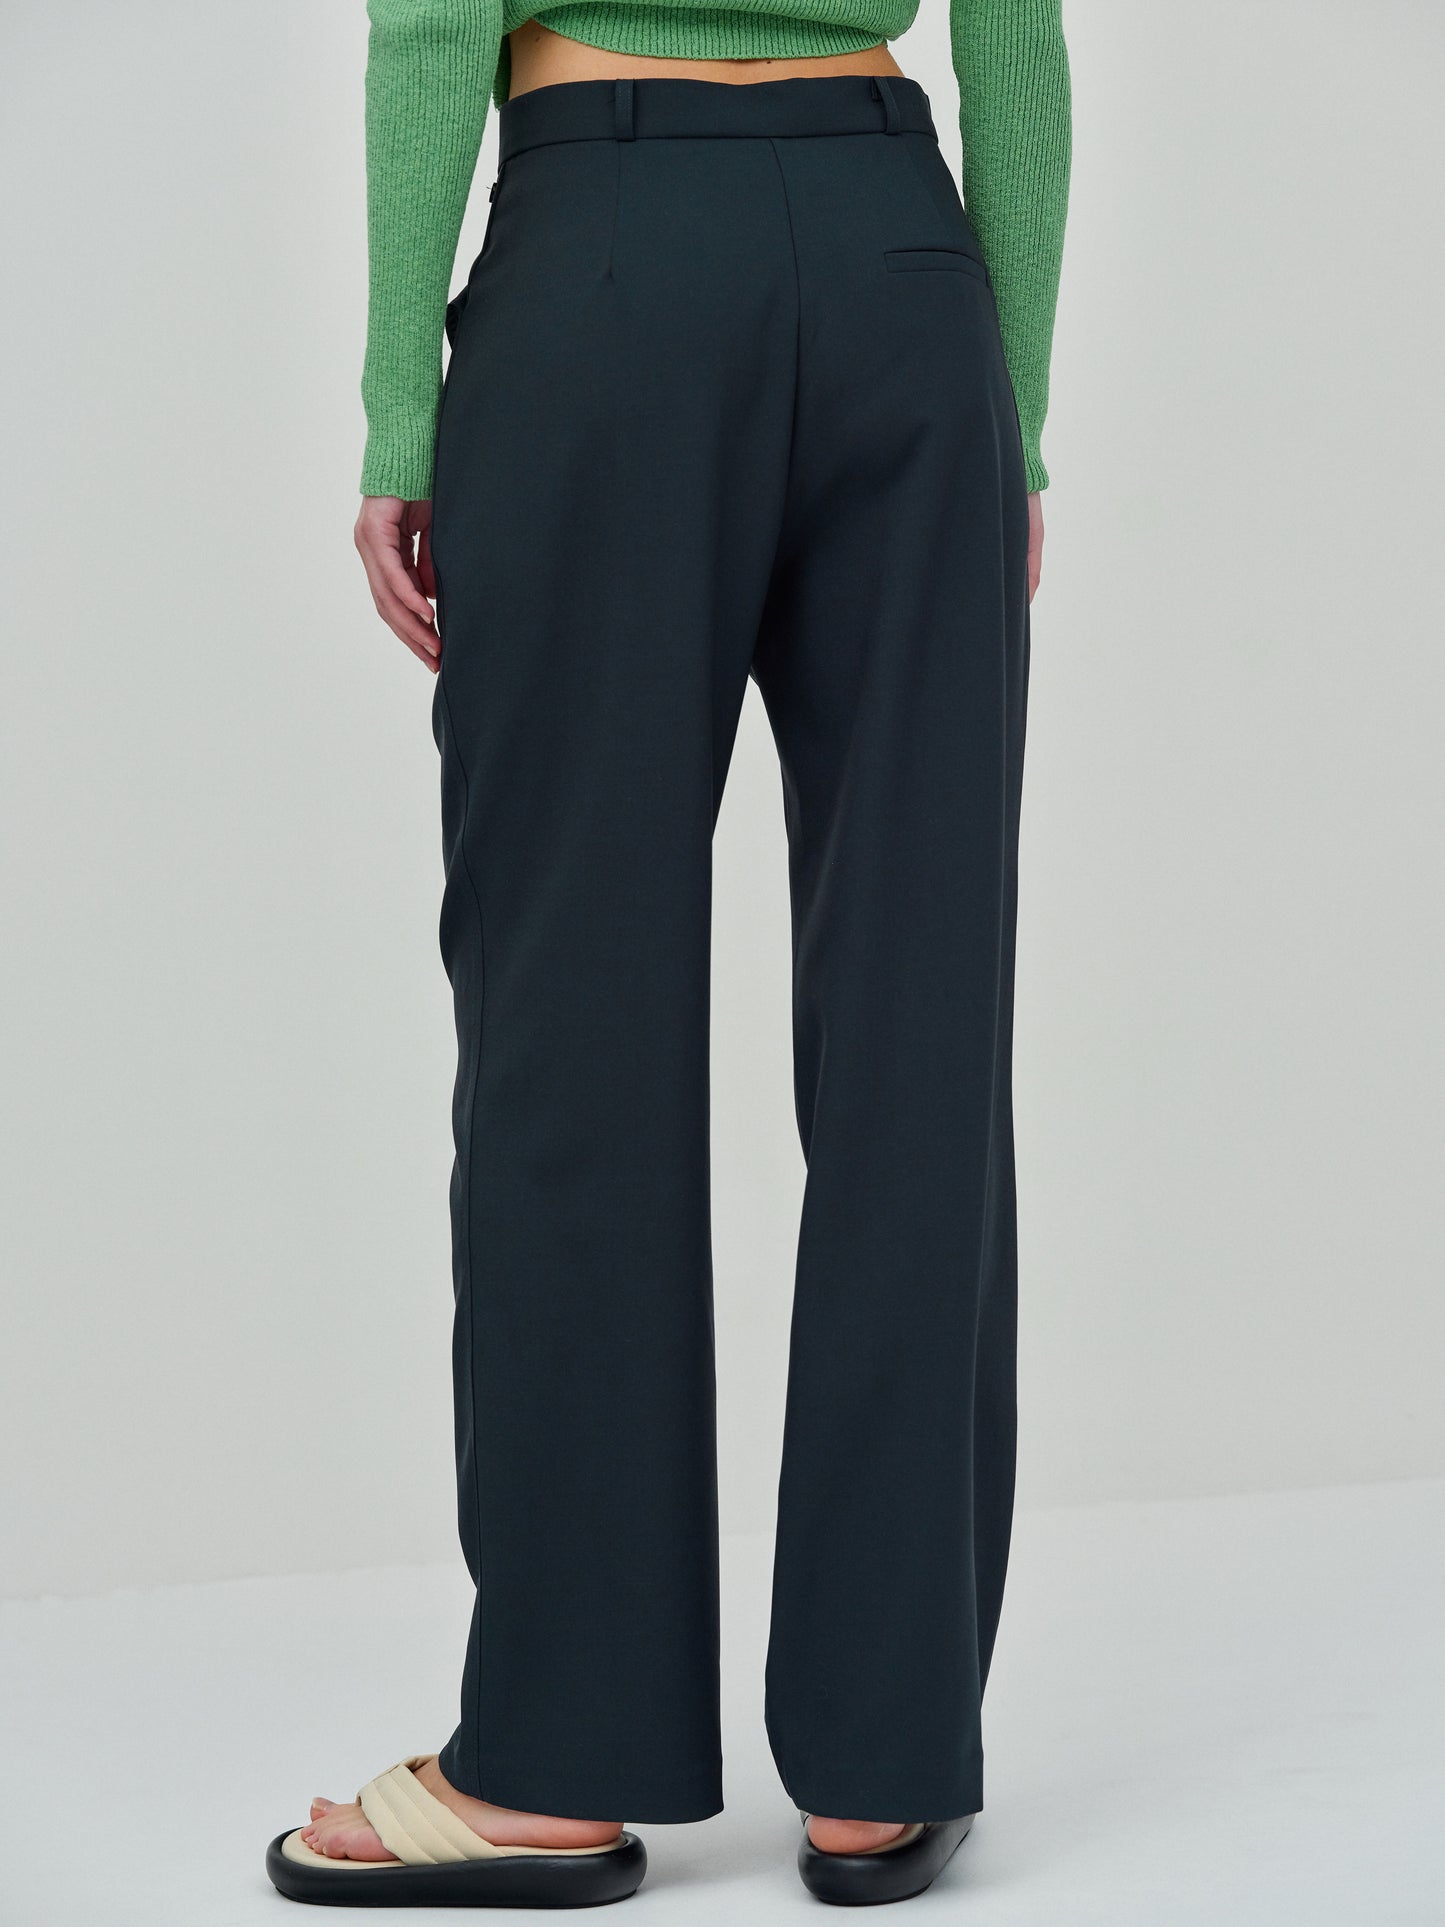 Seam Pocket Trousers, Dark Teal Green